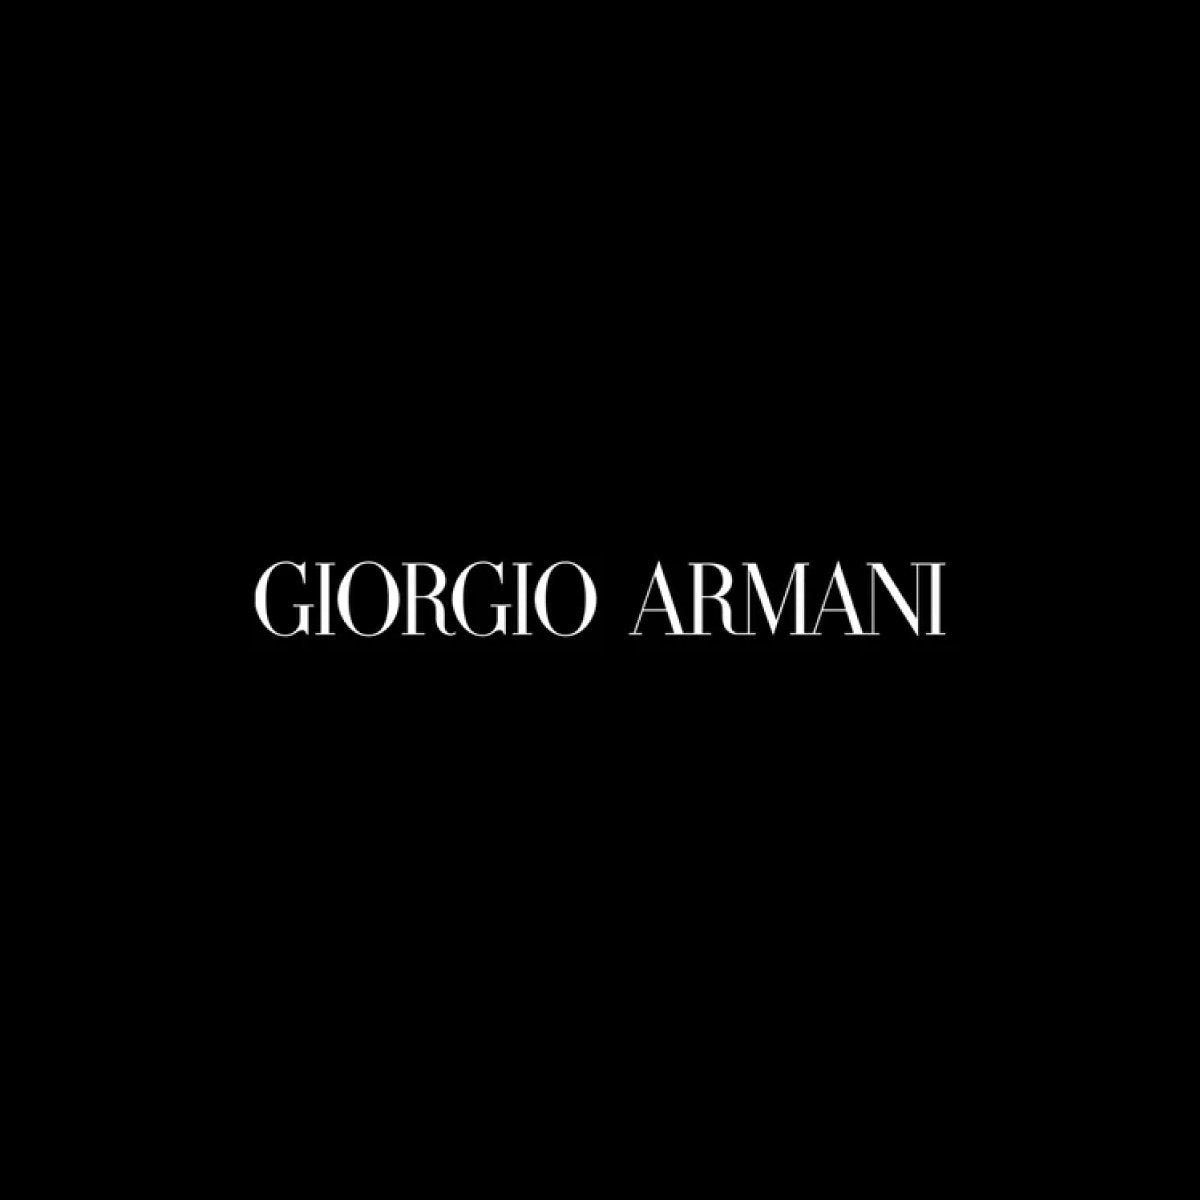 Giorgio Armani (ג'ורג'יו ארמני)